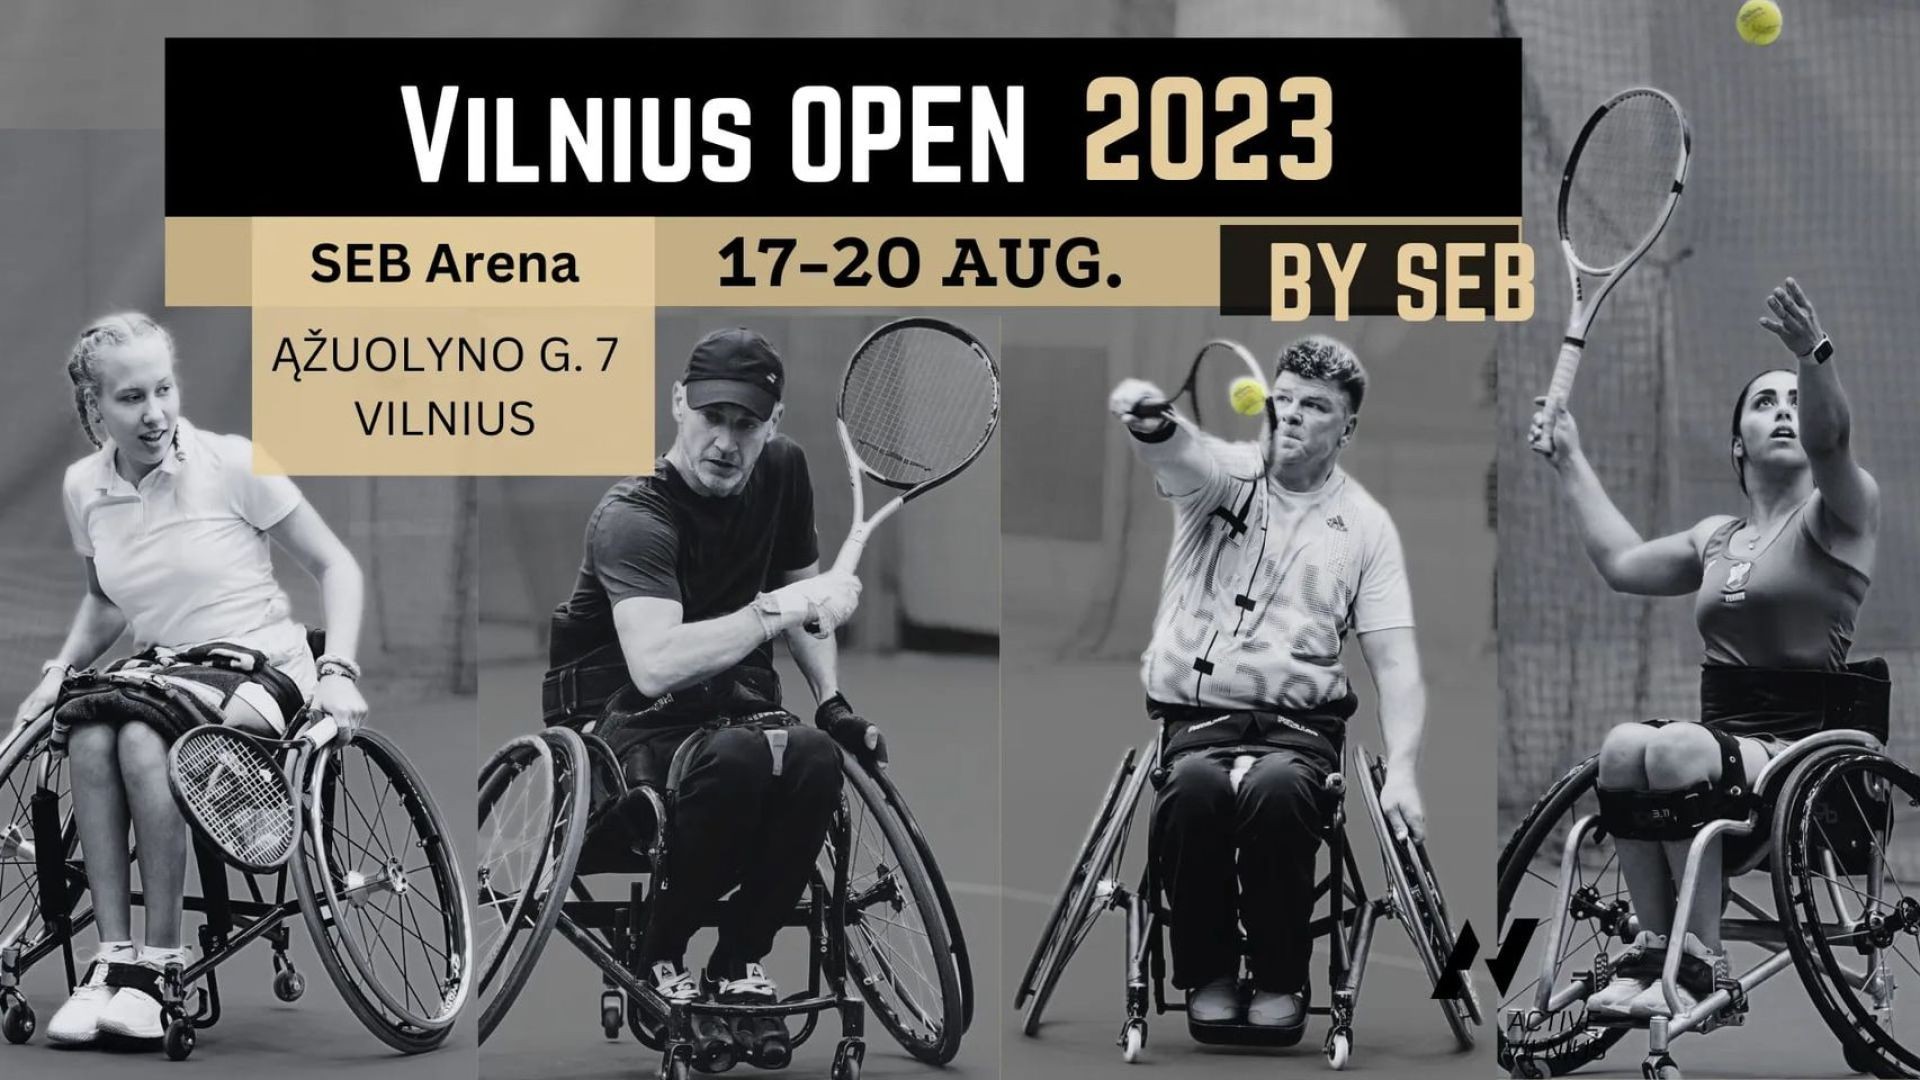 COURT 4 DAY 2 - VILNIIUS OPEN 2023 BY SEB